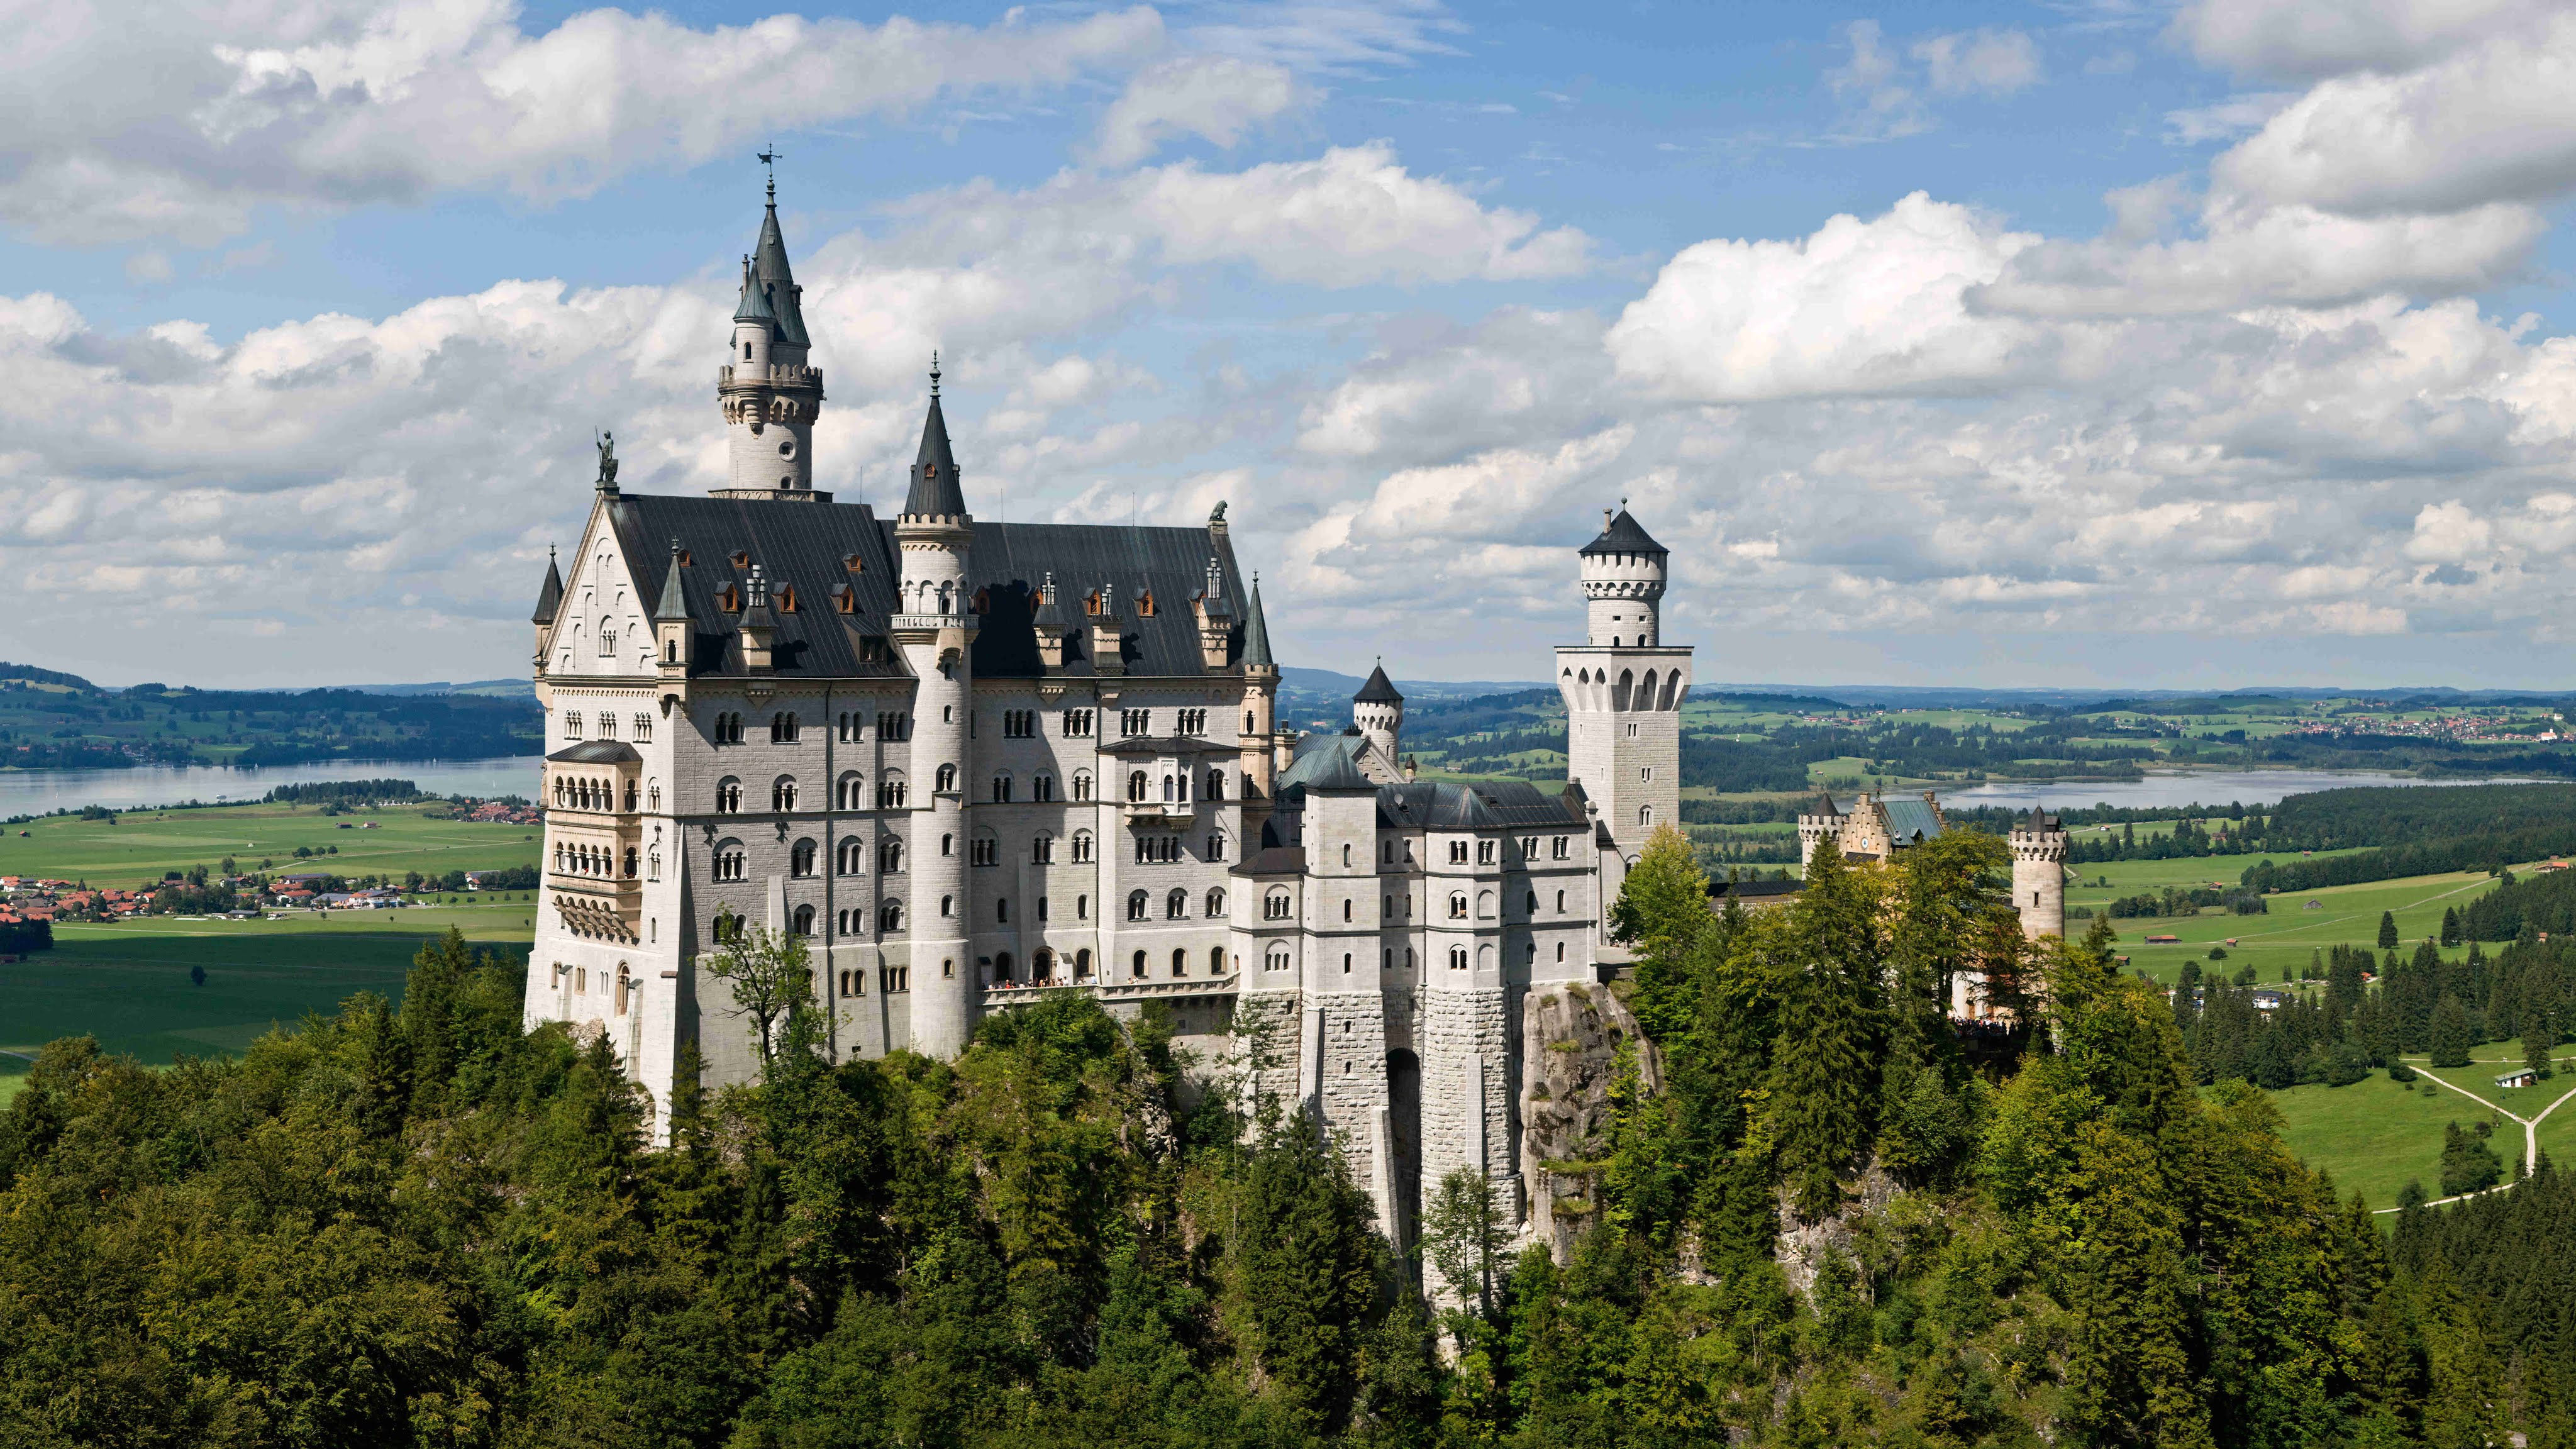 Visiting Neuschwanstein castle in Bavaria, Germany - YouTube